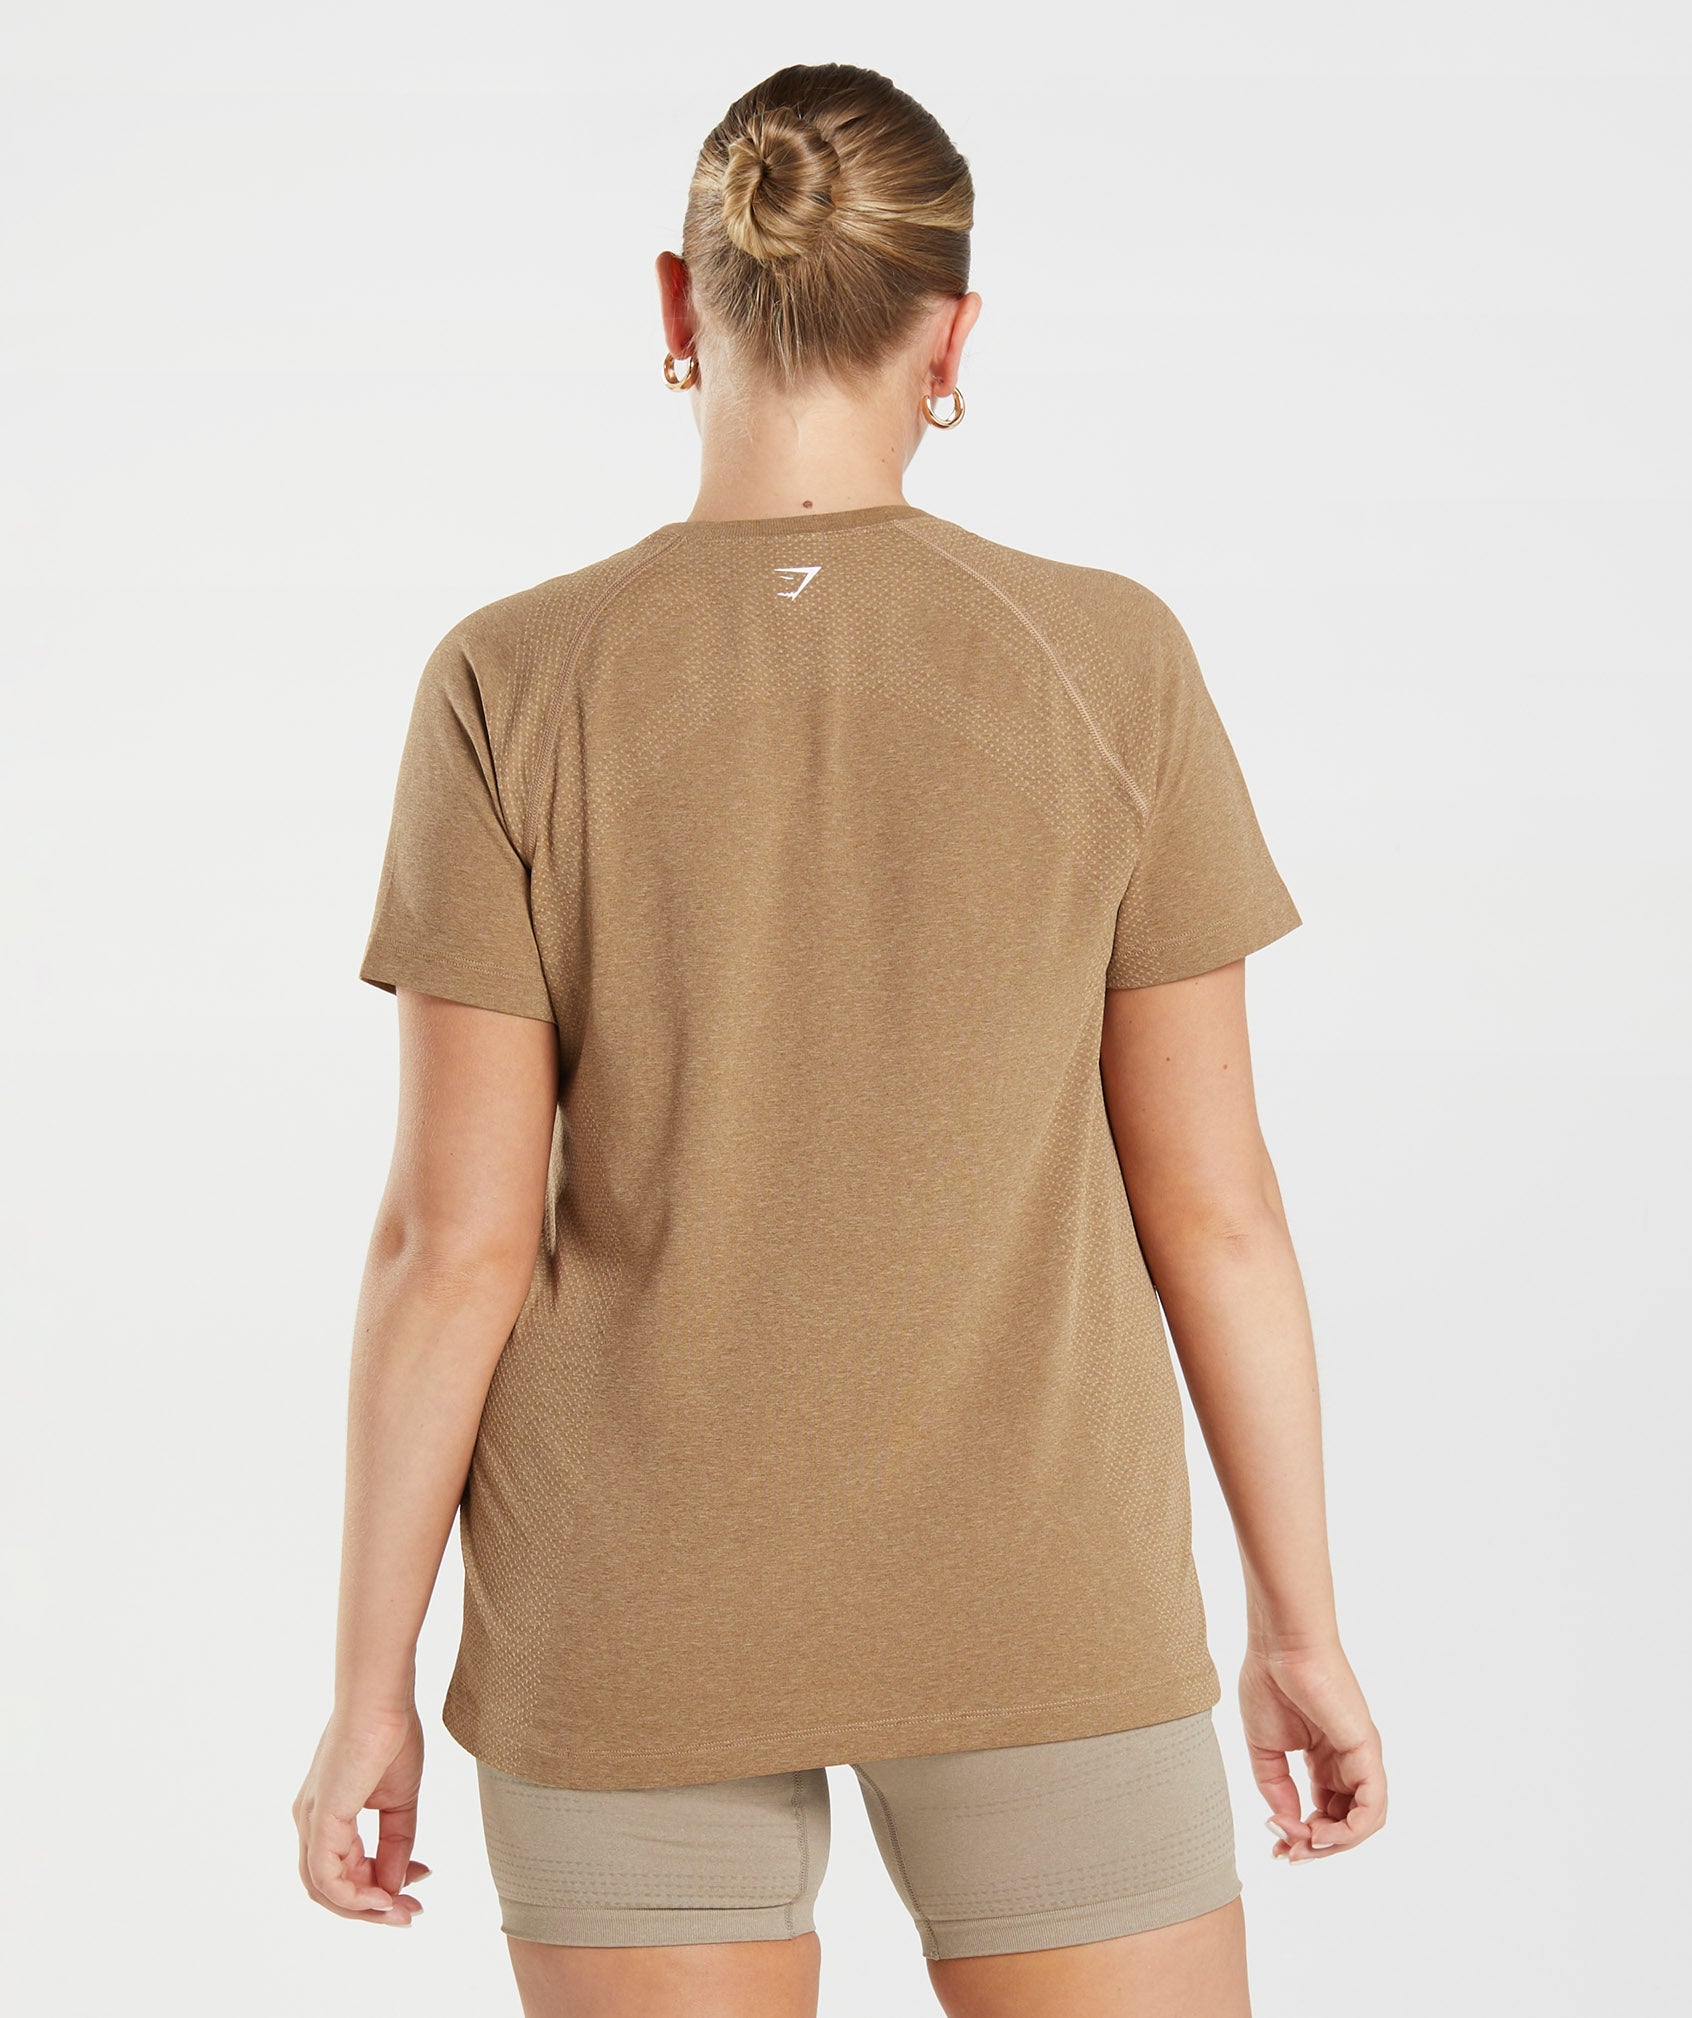 Vital Seamless 2.0 Light T-Shirt  in Fawn Marl